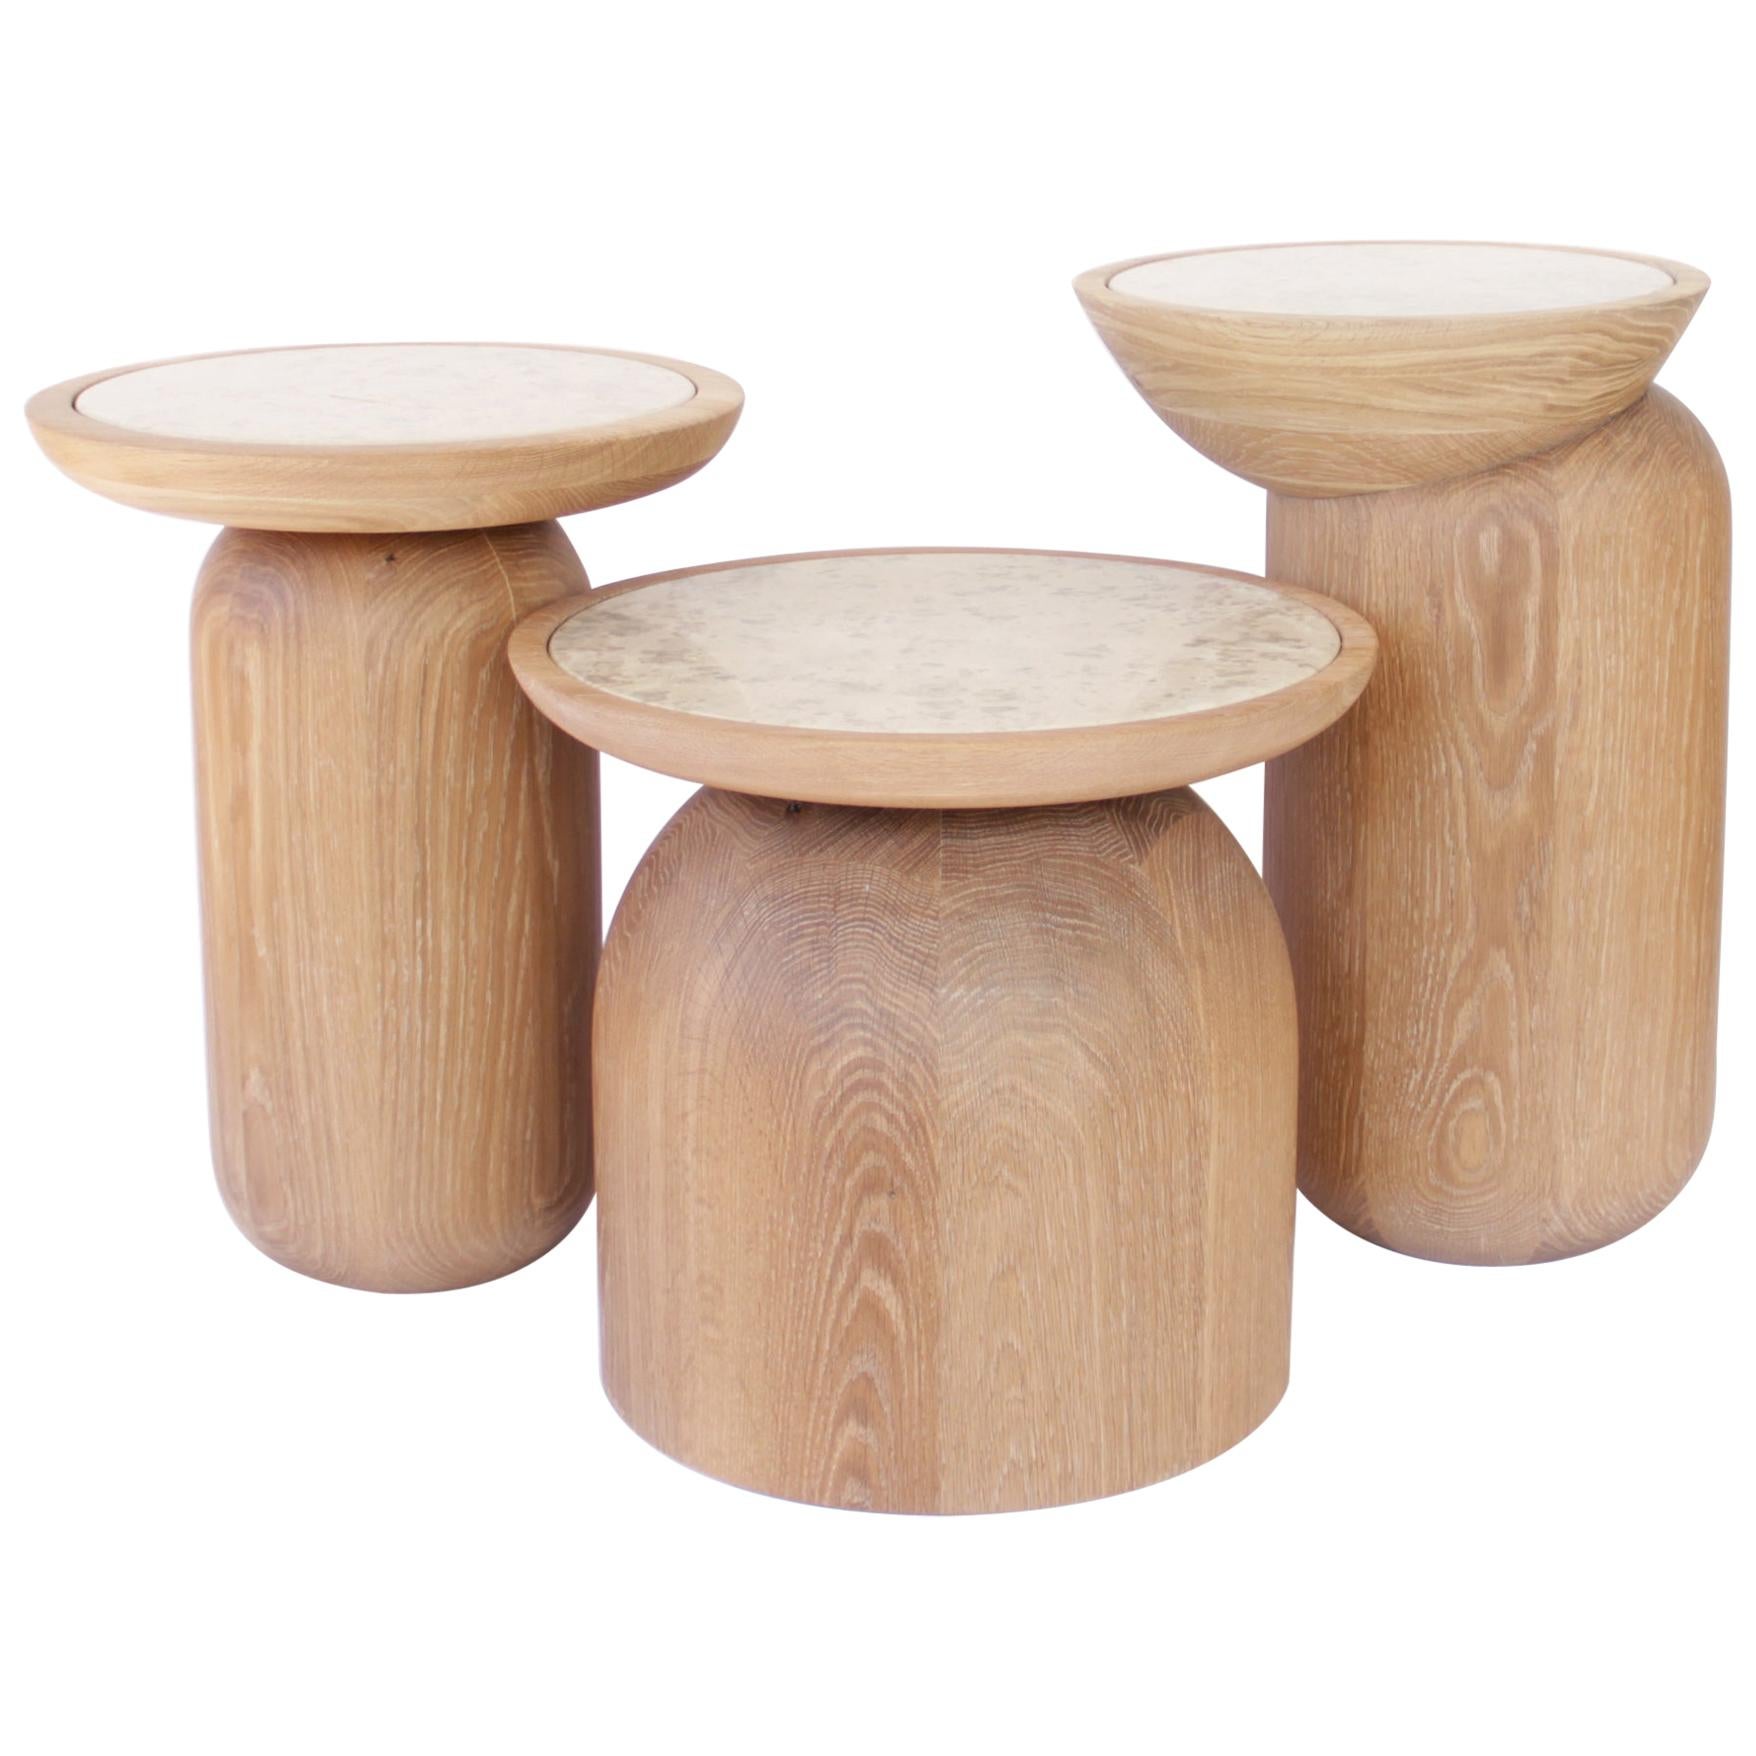 Mezcalitos Set, Contemporary White Oak Limestone Side Table by SinCa Design